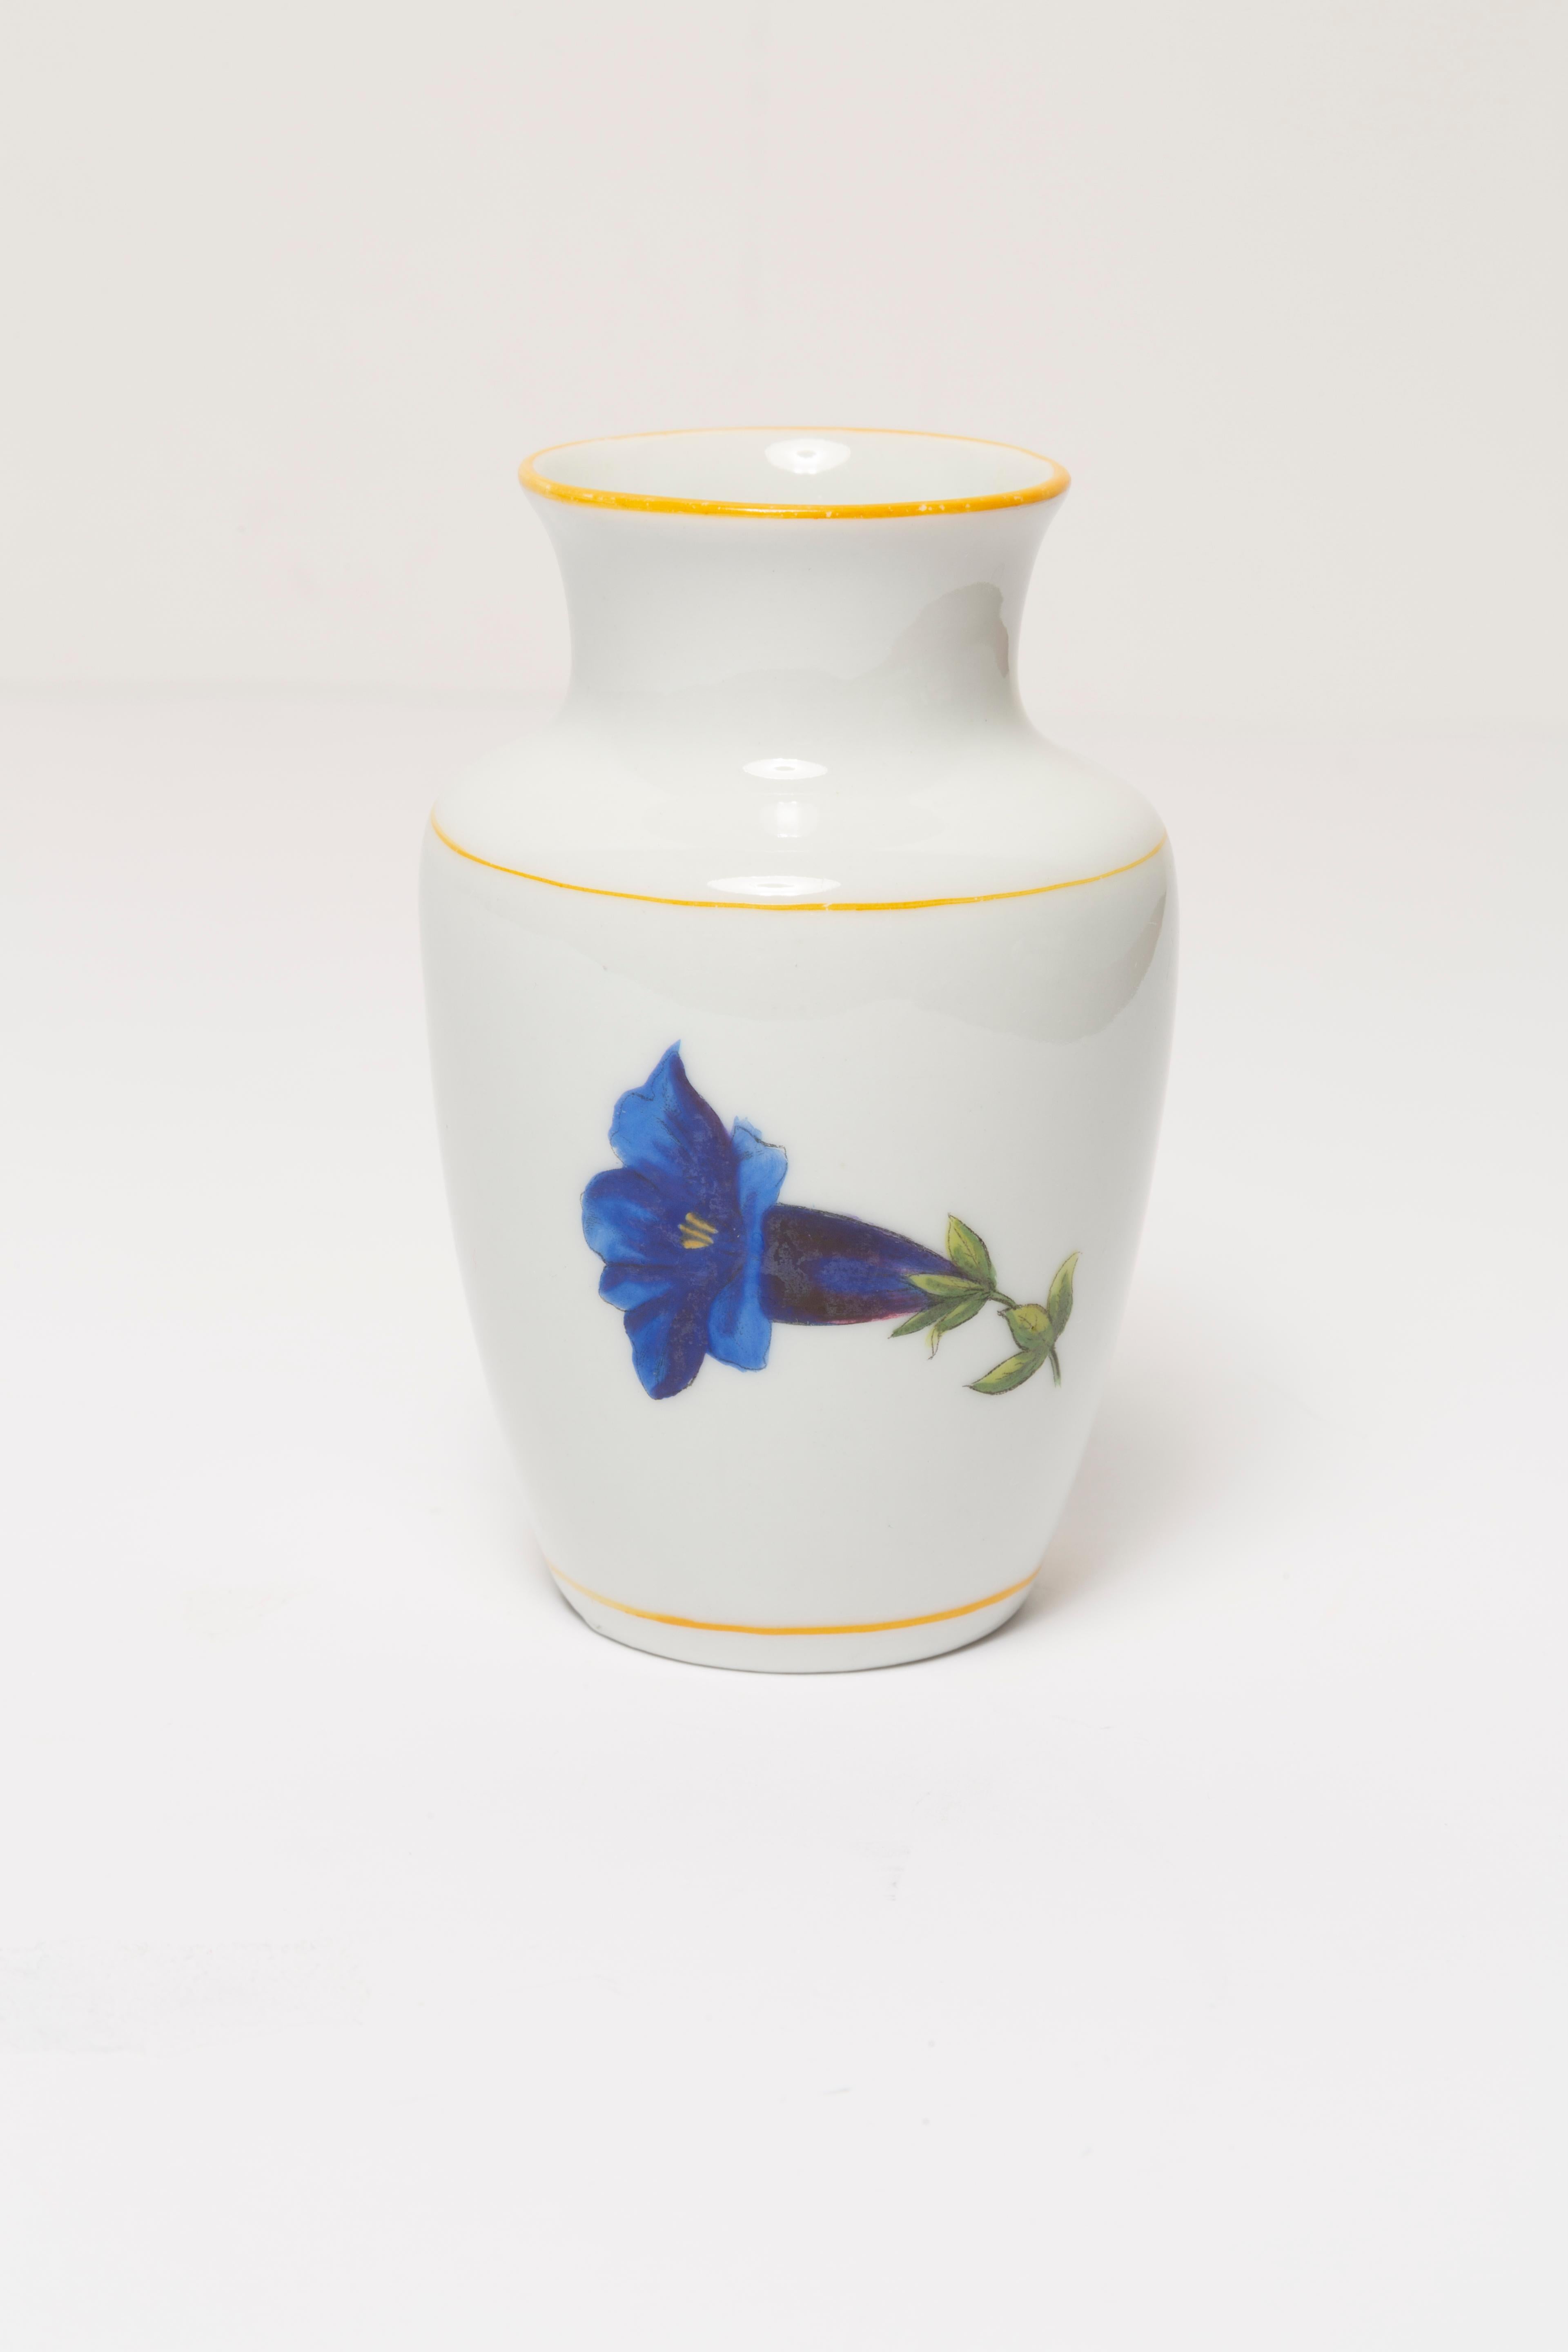 20th Century Midcentury Vintage Small Porcelain Blue Flower Vase, Europe, 1960s For Sale